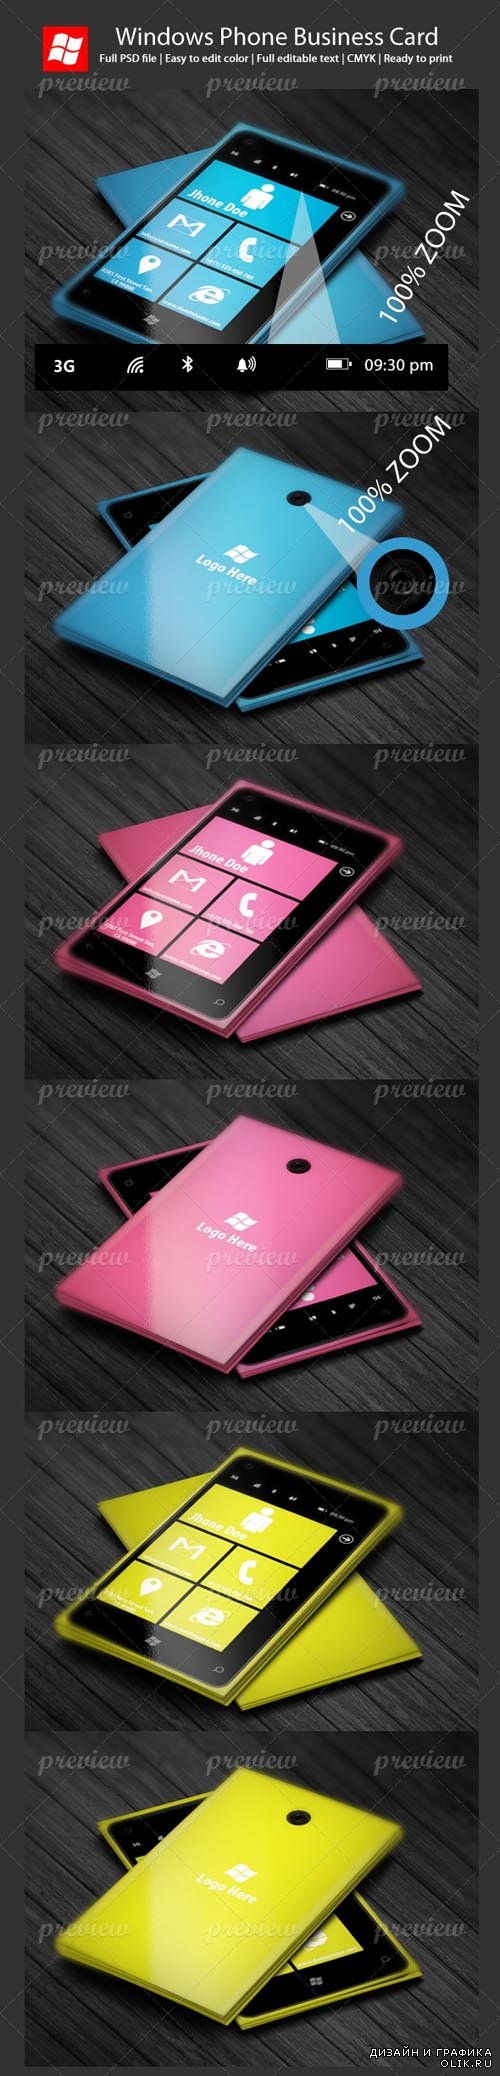 Business Card PSD - Windows Phone